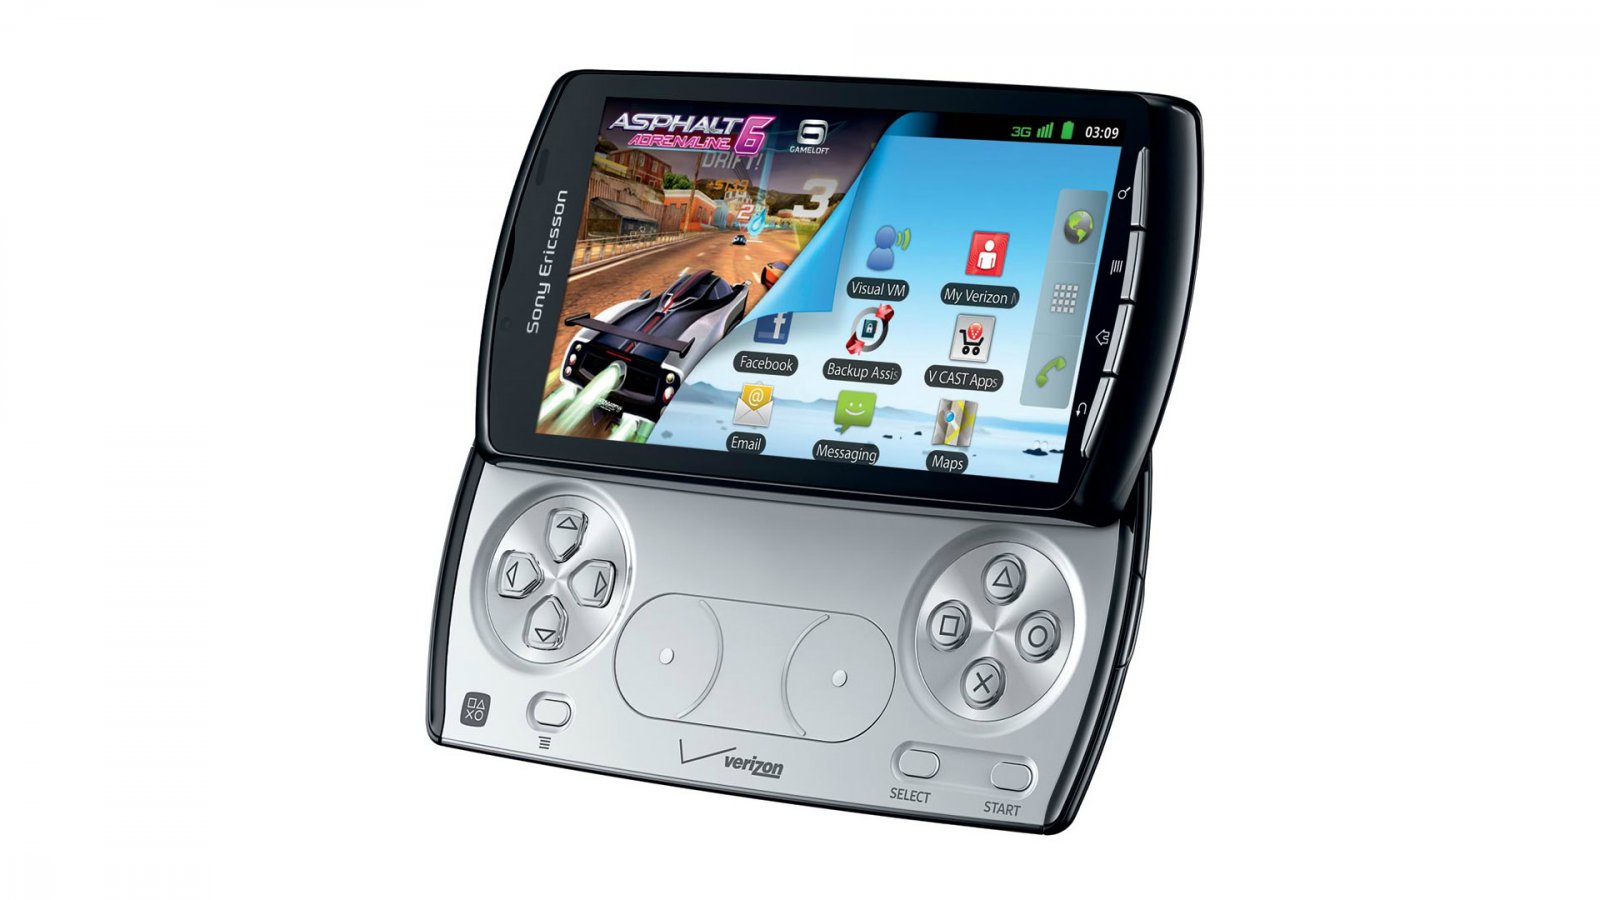 Il 'PlayStation Phone' di Sony Ericsson